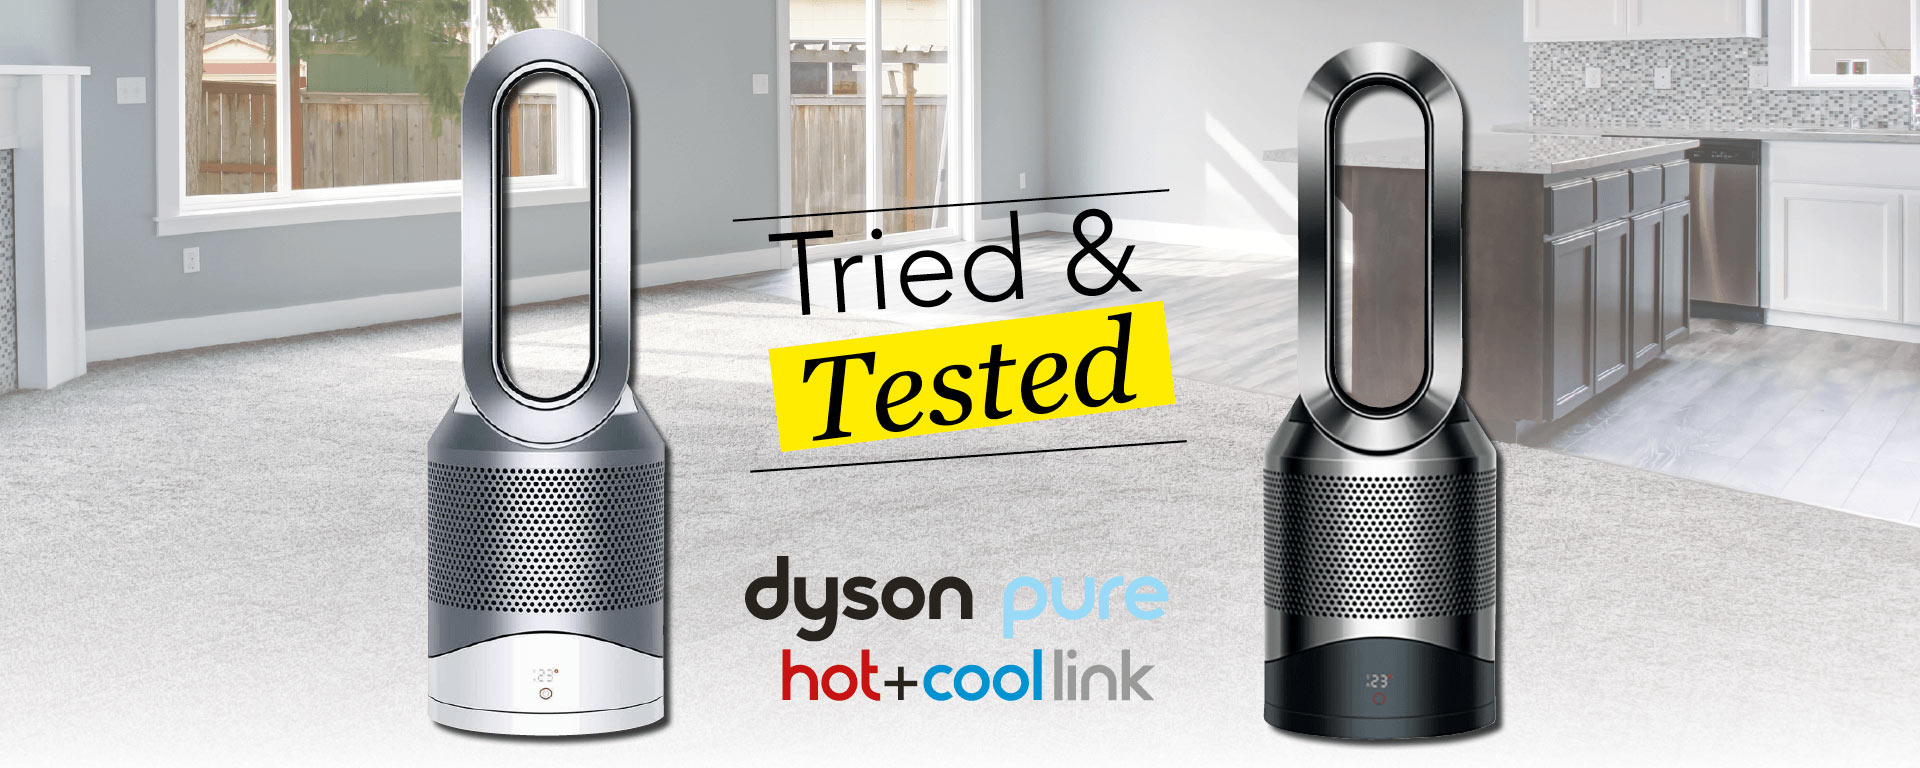 Dyson Pure - A Cool Idea For Fresh Air | Harvey Norman Australia